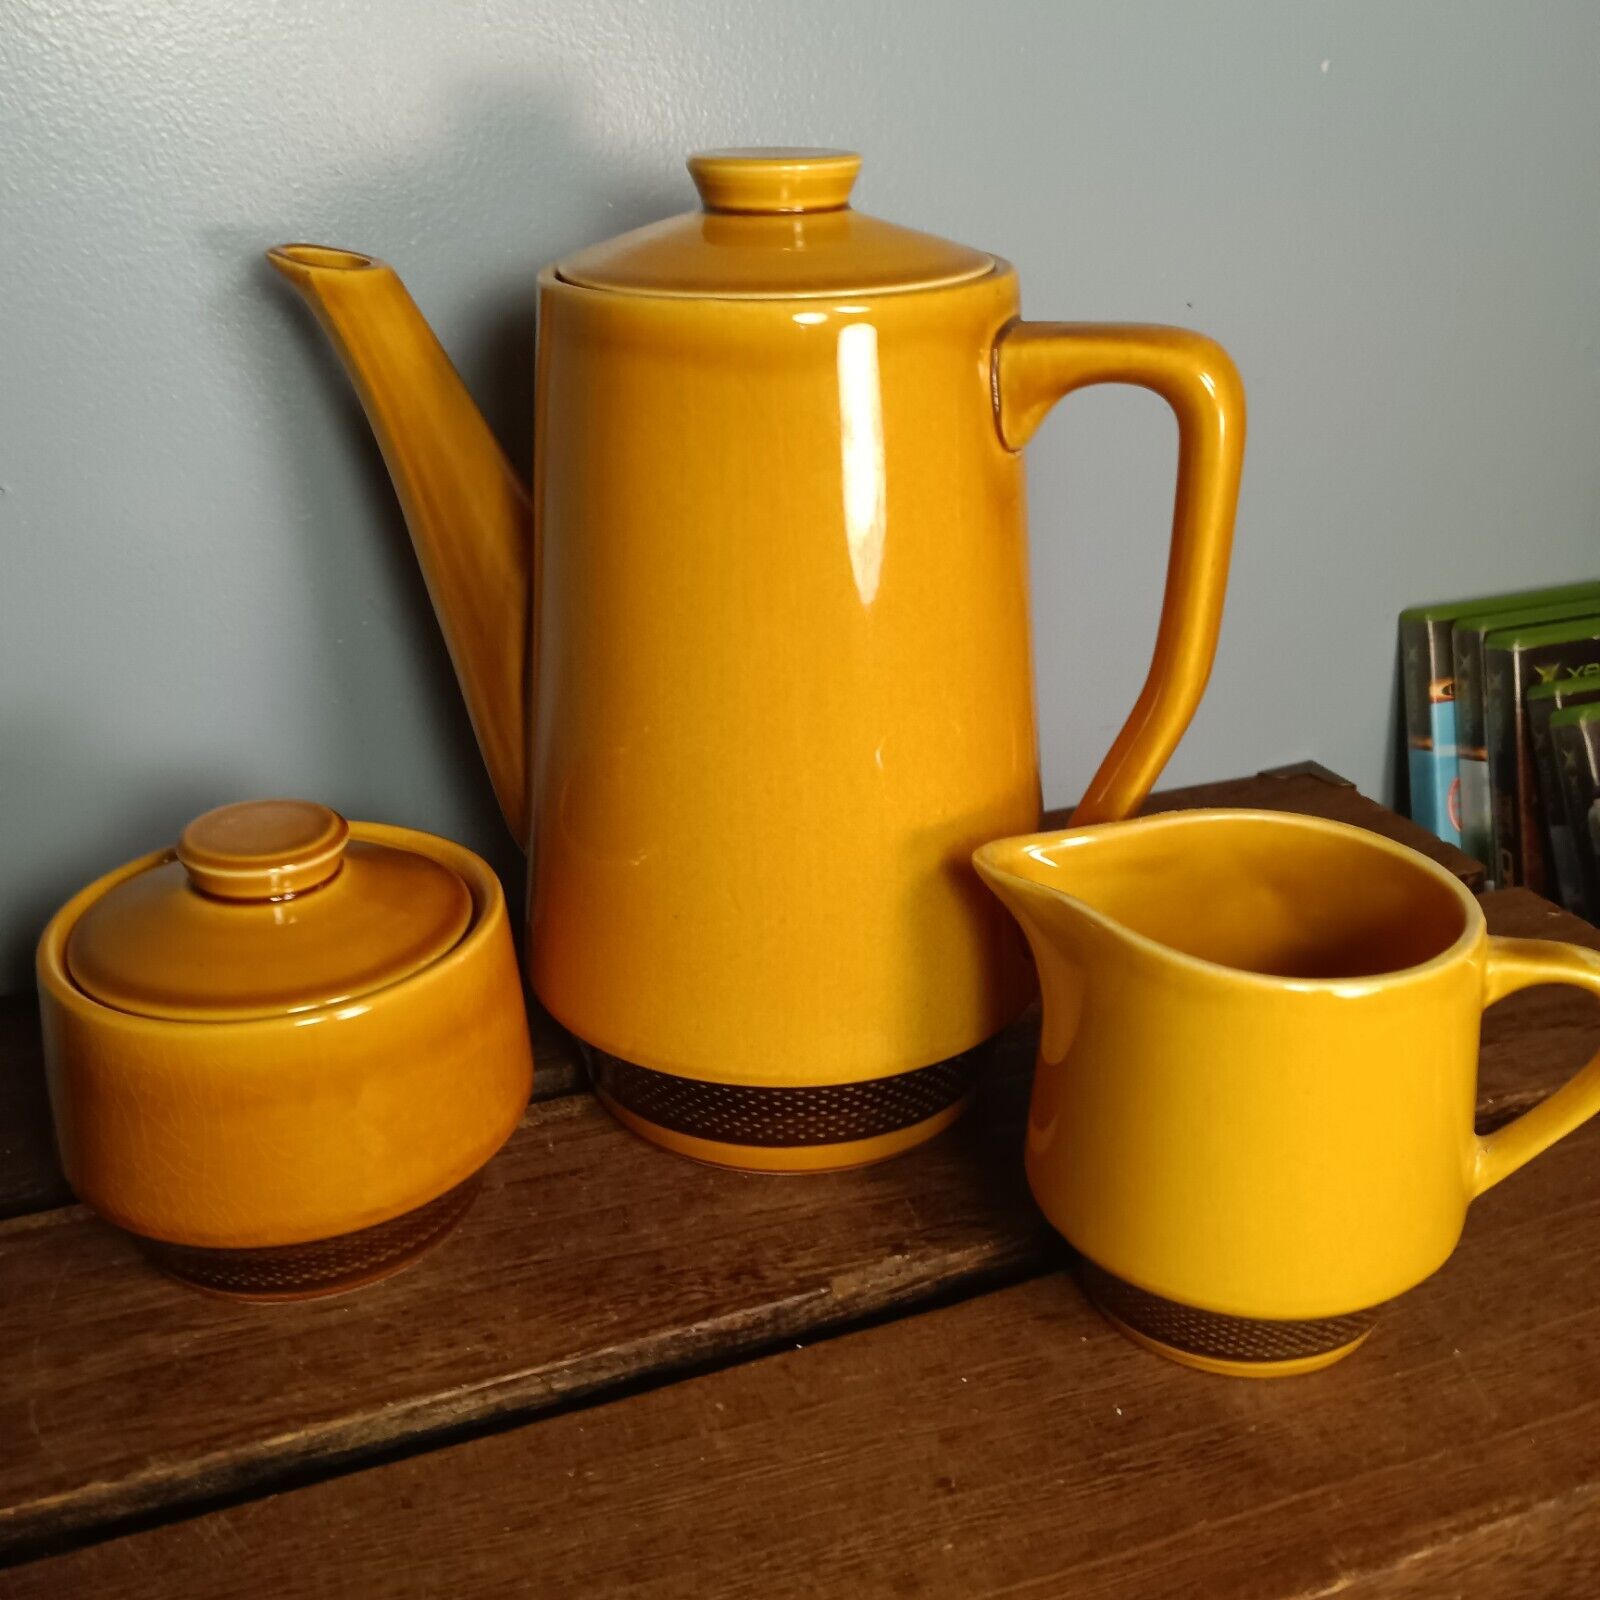 Vintage Aurora Firestone Teapot, Creamer, Sugar Bowl Set, Harvest Gold & Brown